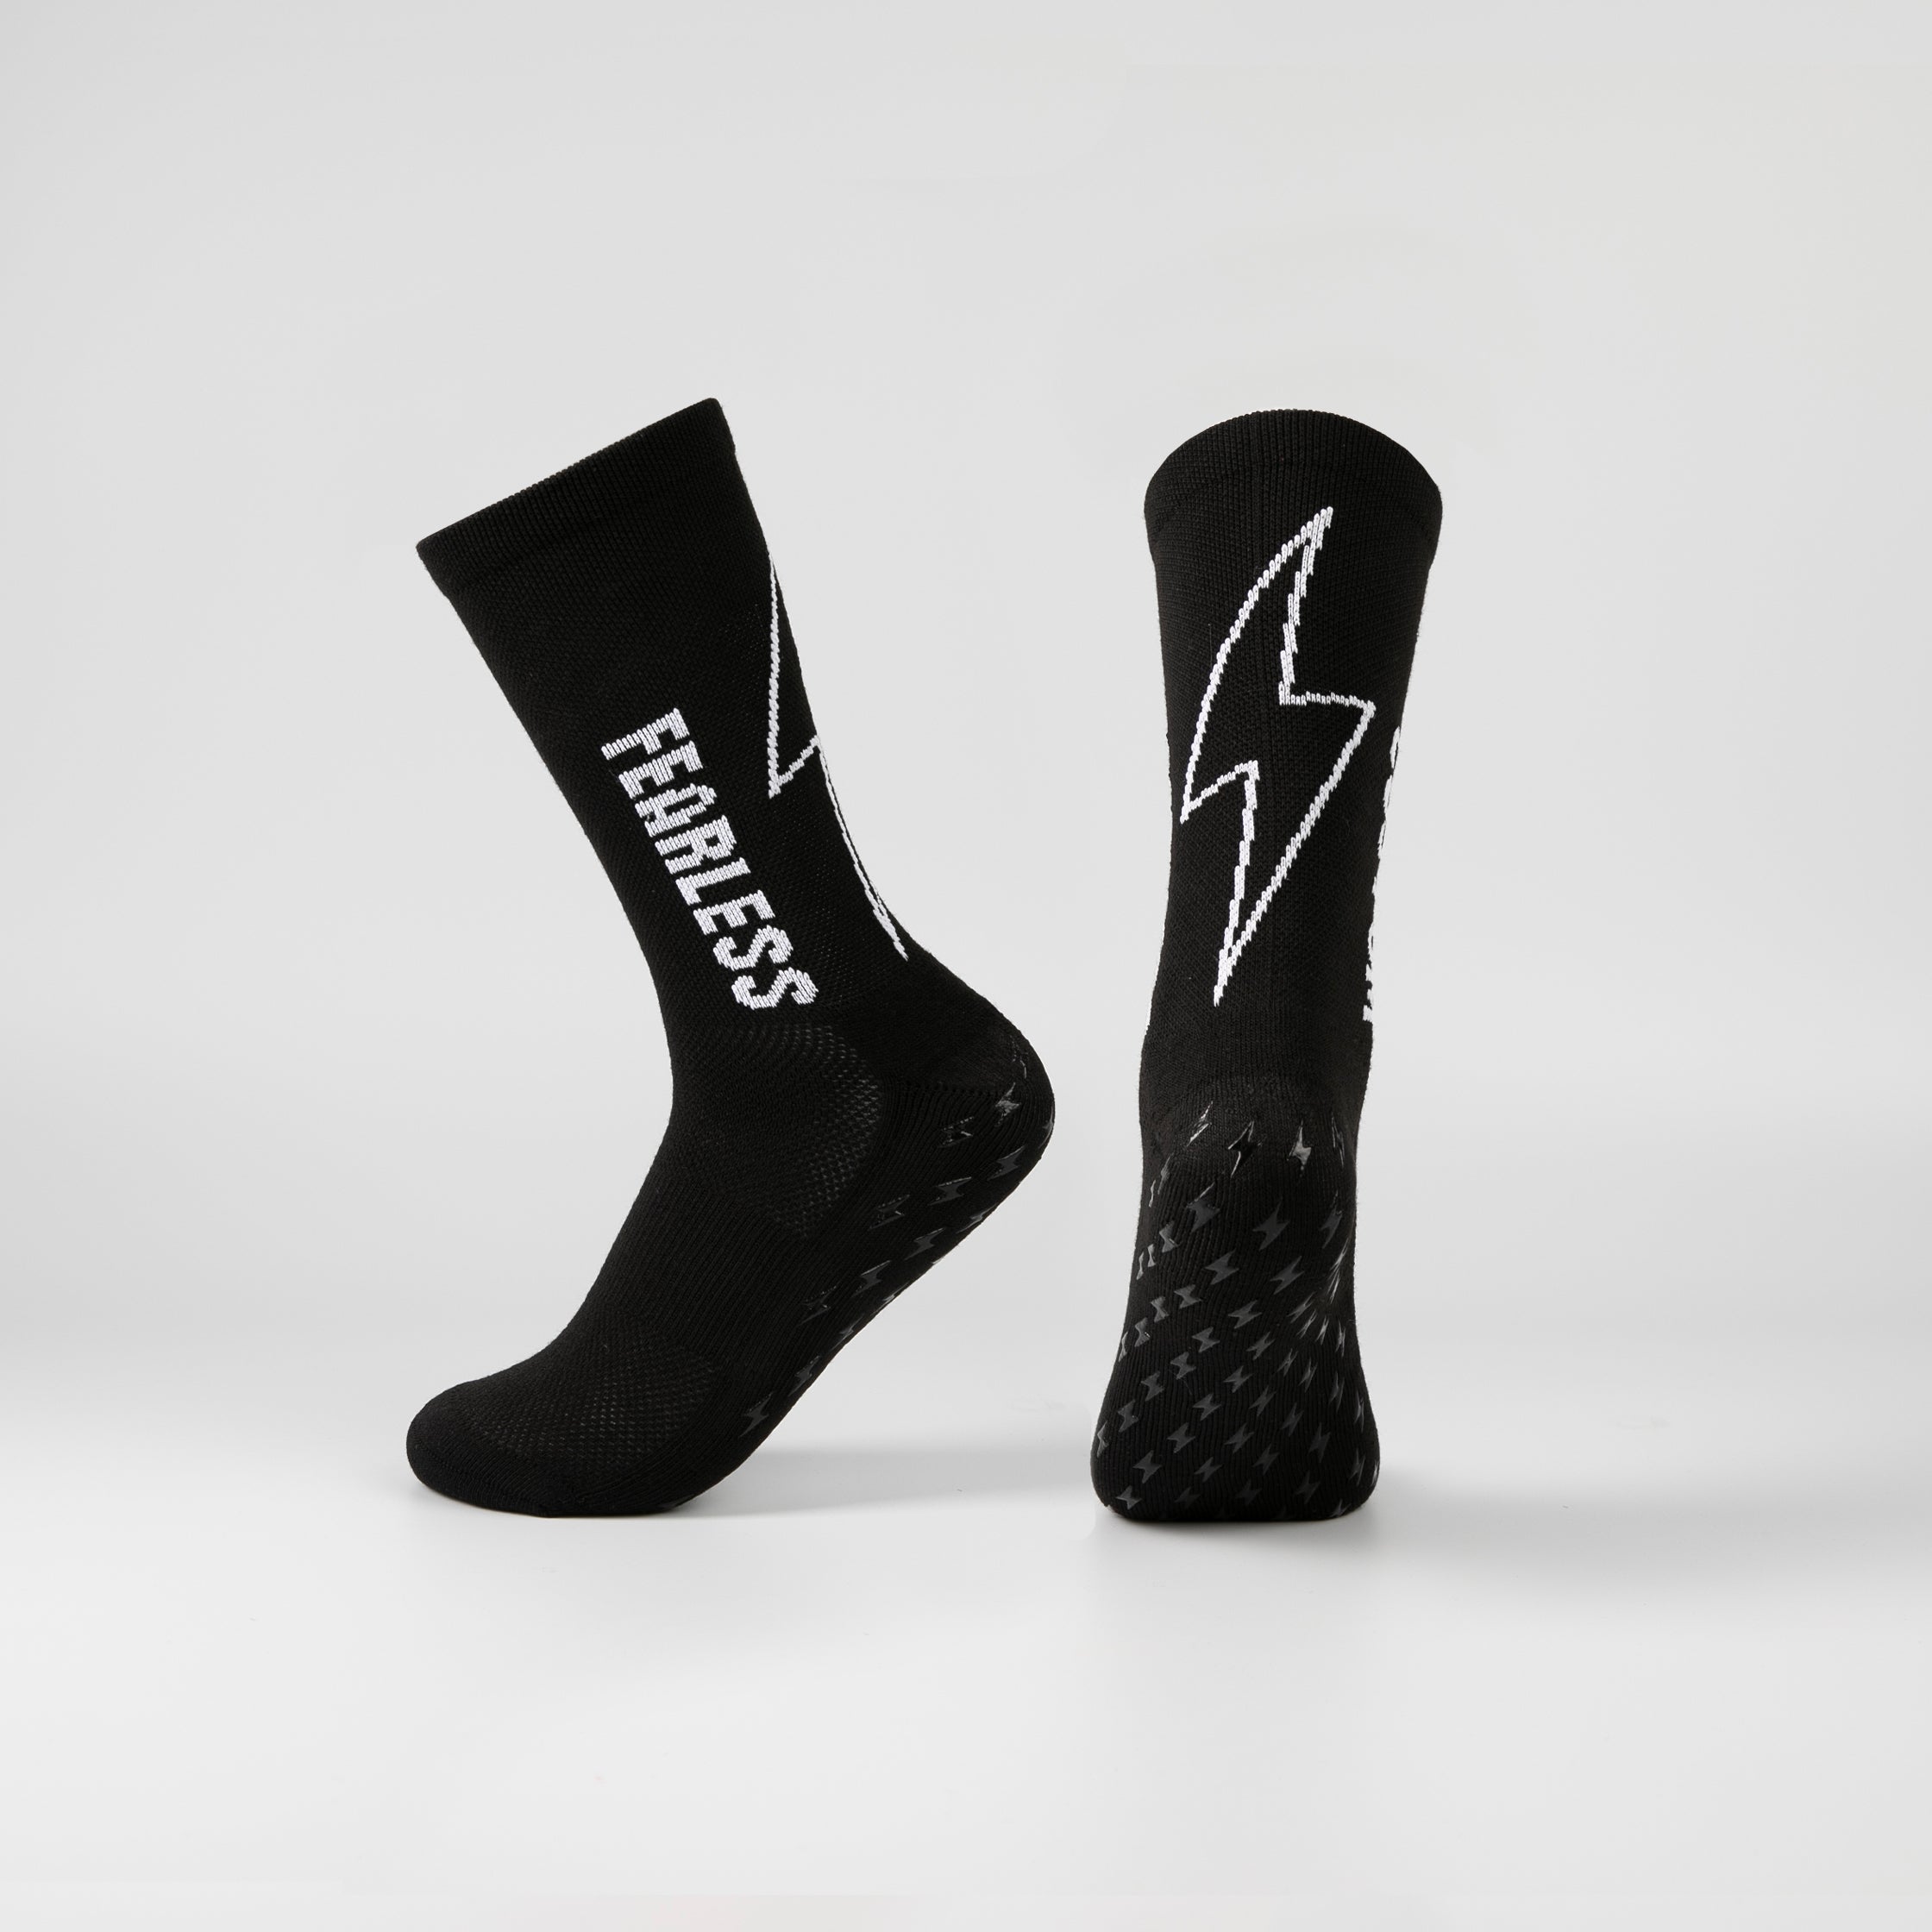 Fearless grip socks - COMFORT